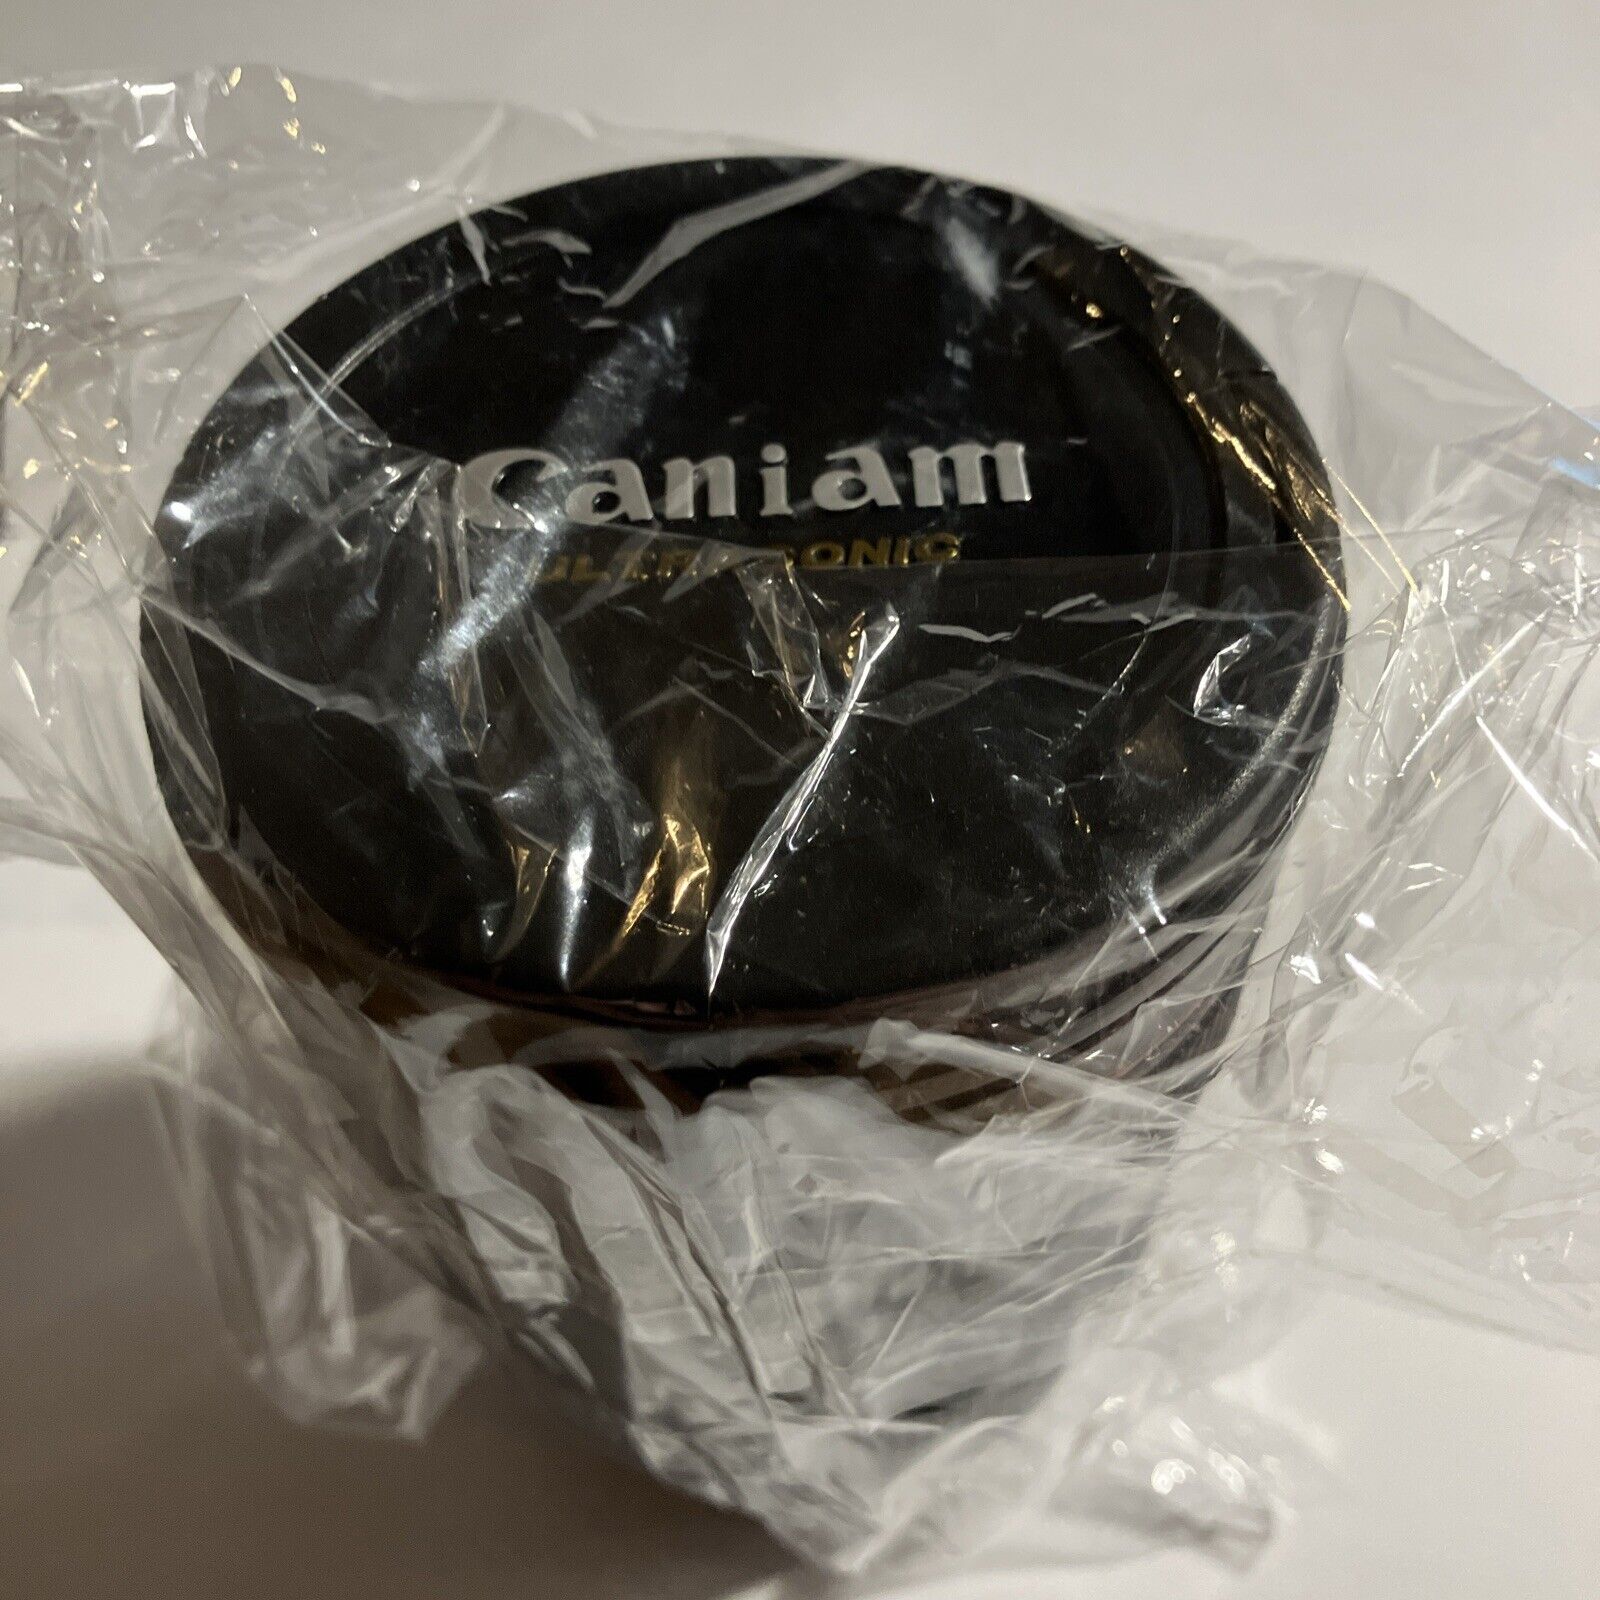 Caniam Ultrasonic Zoom Lens 24 - 105mm Coffee Cup Mug Cup Macro Lens Travel Mug